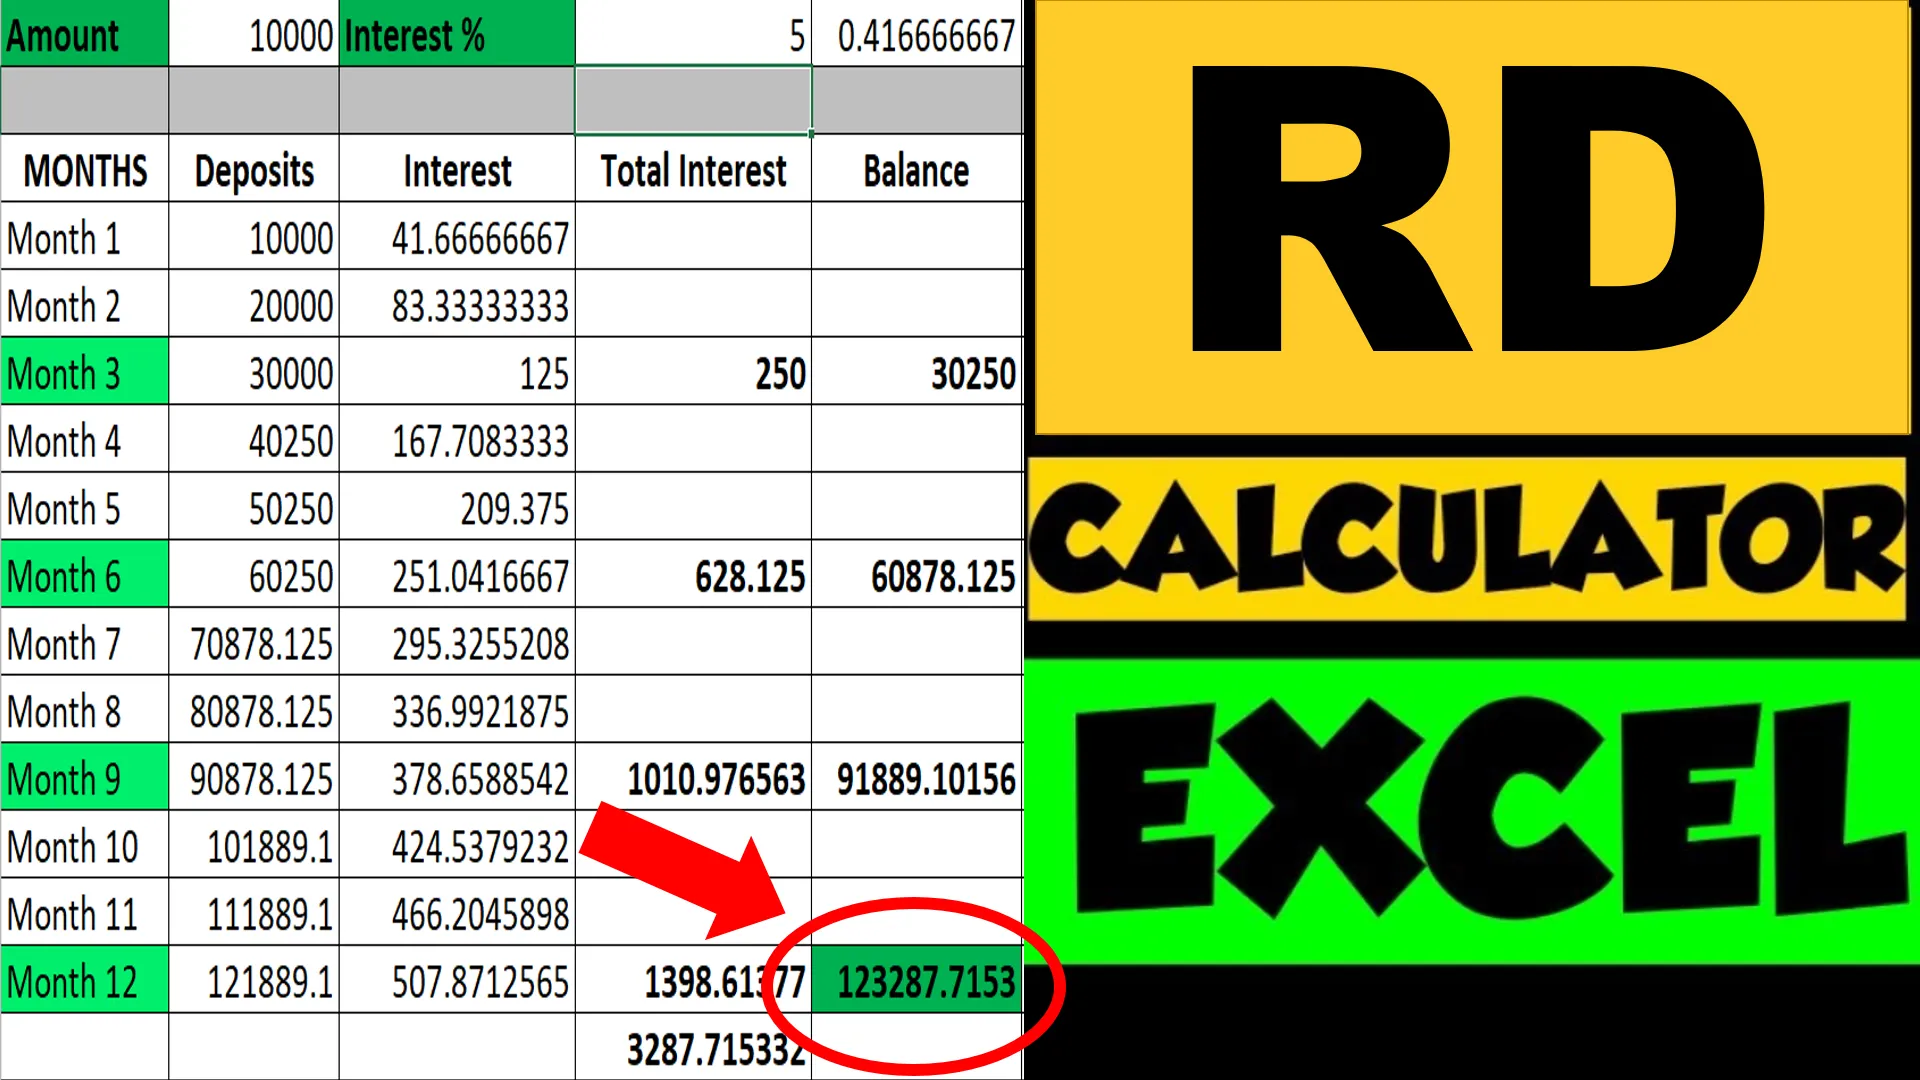 rd-calculator-in-excel-download-recurring-deposit-interest-calculator